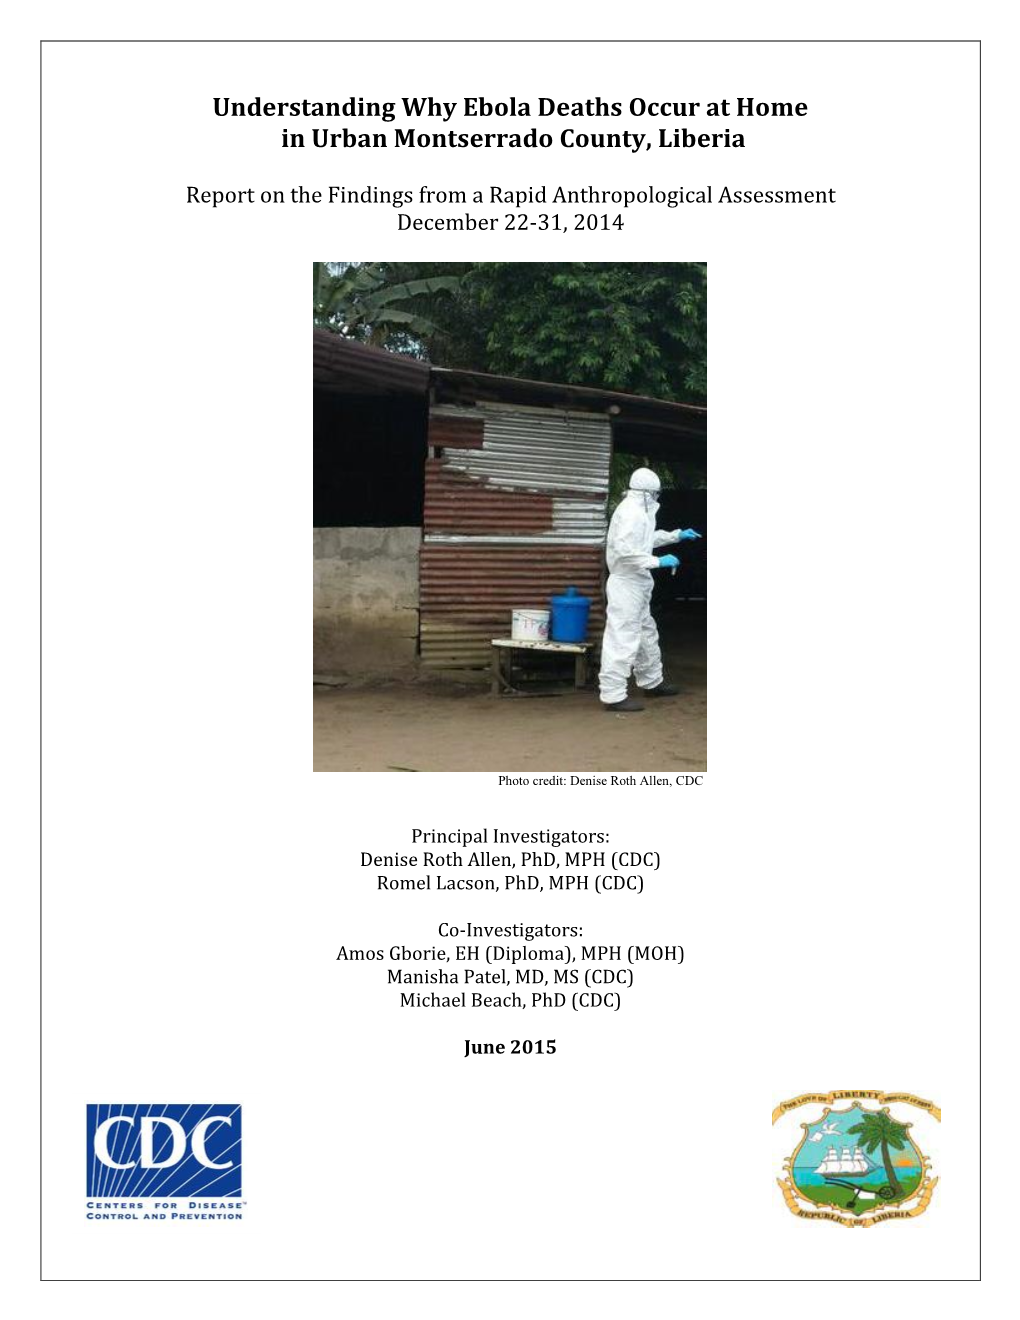 Understanding Why Ebola Deaths Occur at Home in Urban Montserrado County, Liberia